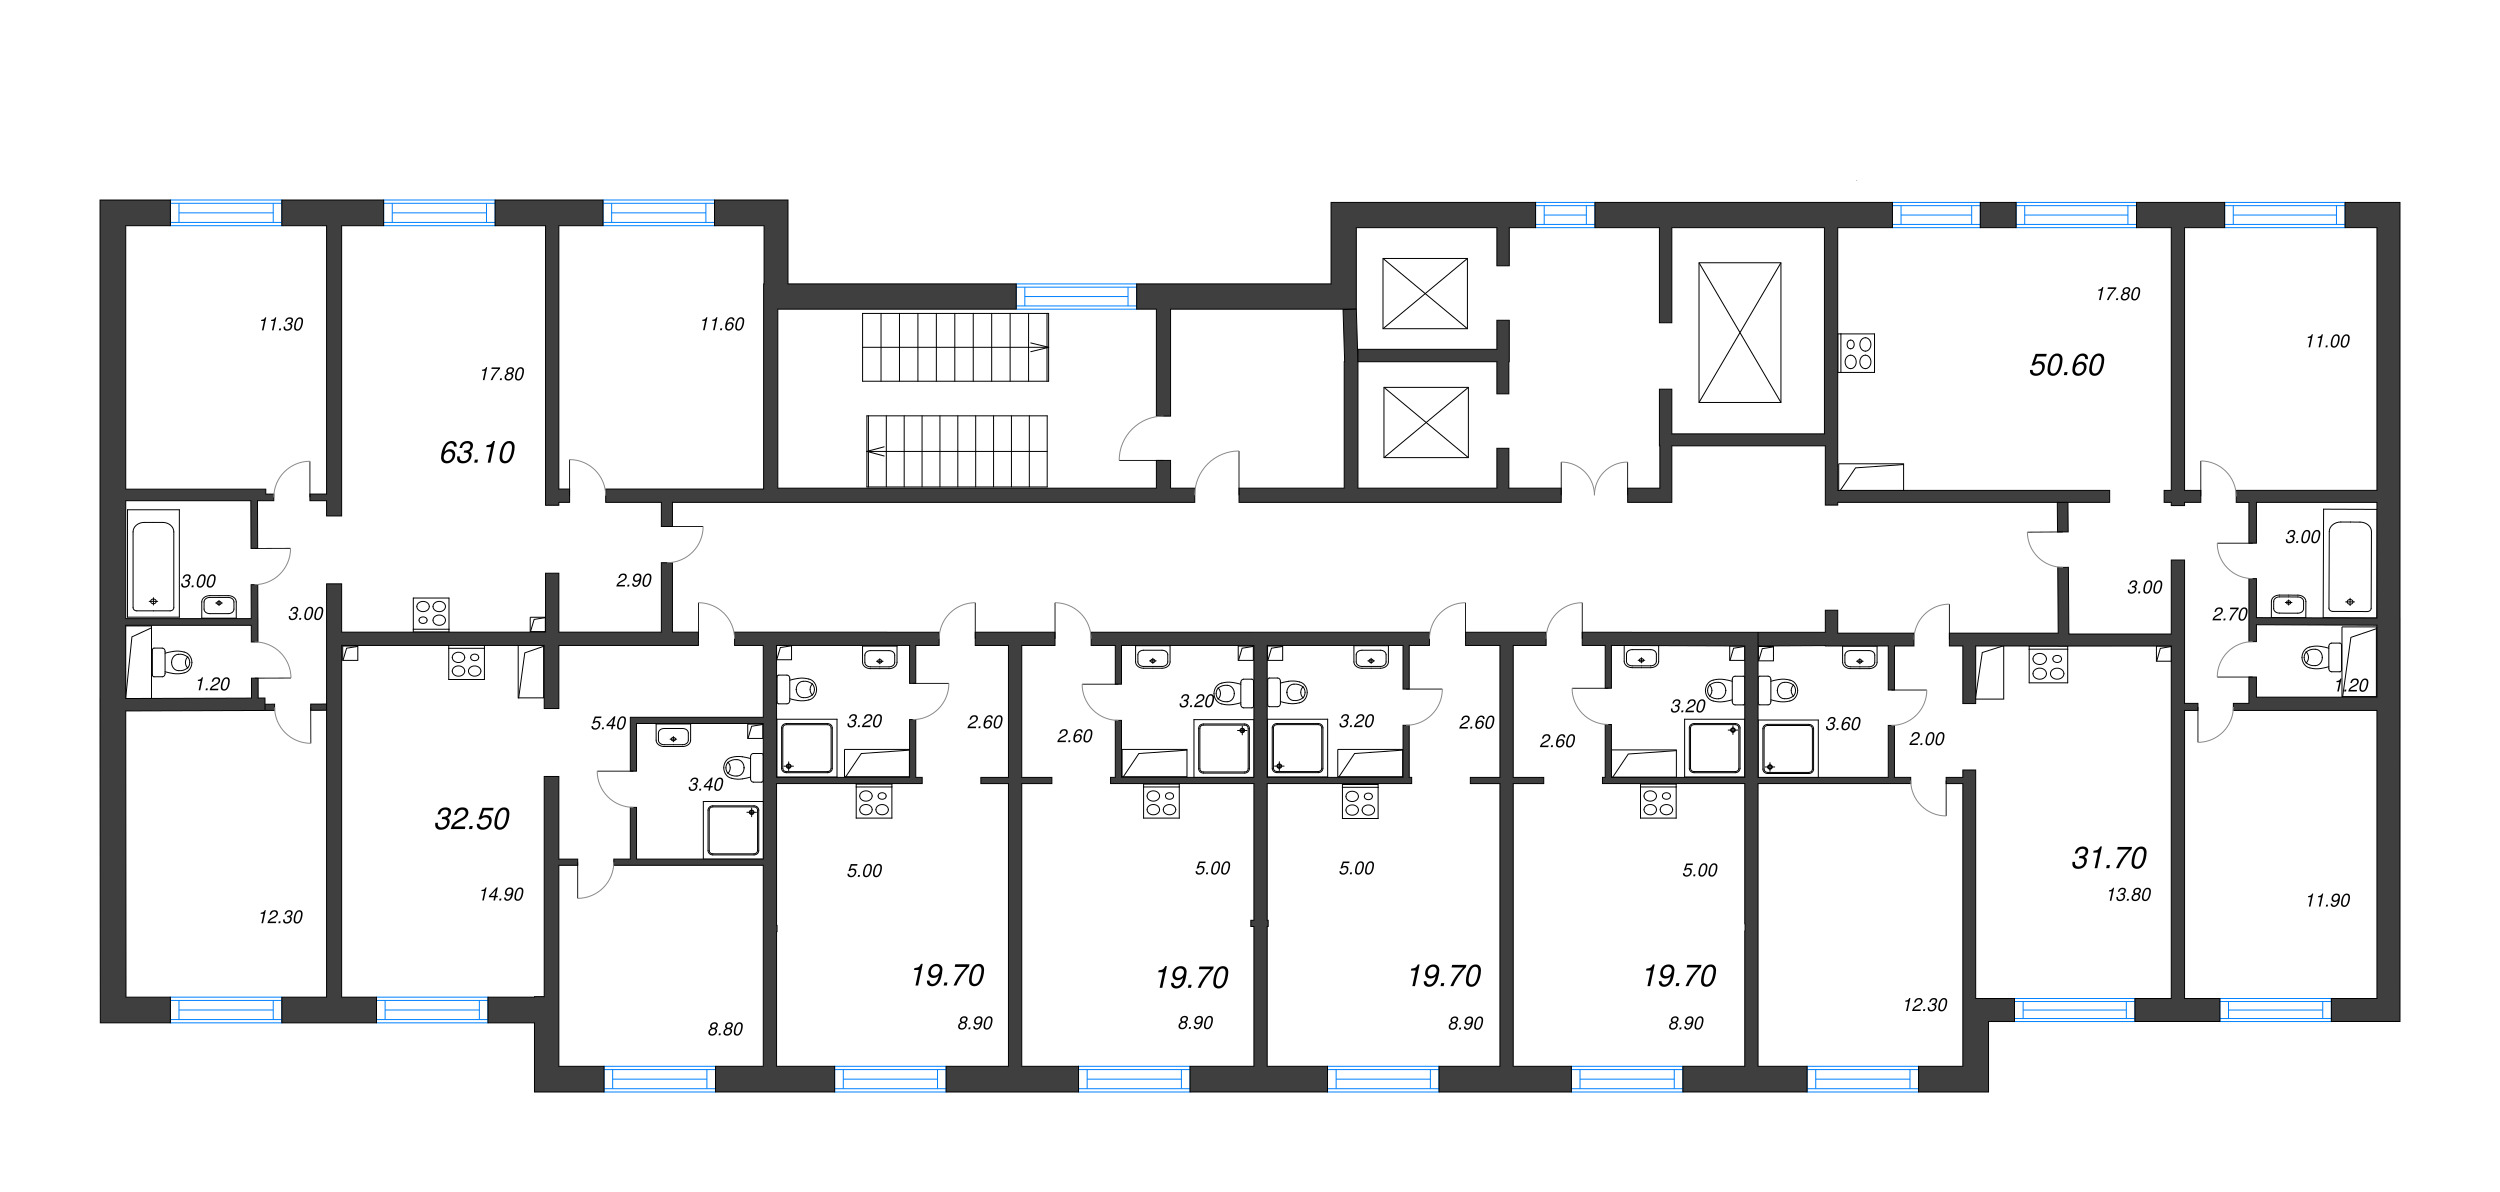 2-комнатная (Евро) квартира, 32.5 м² - планировка этажа